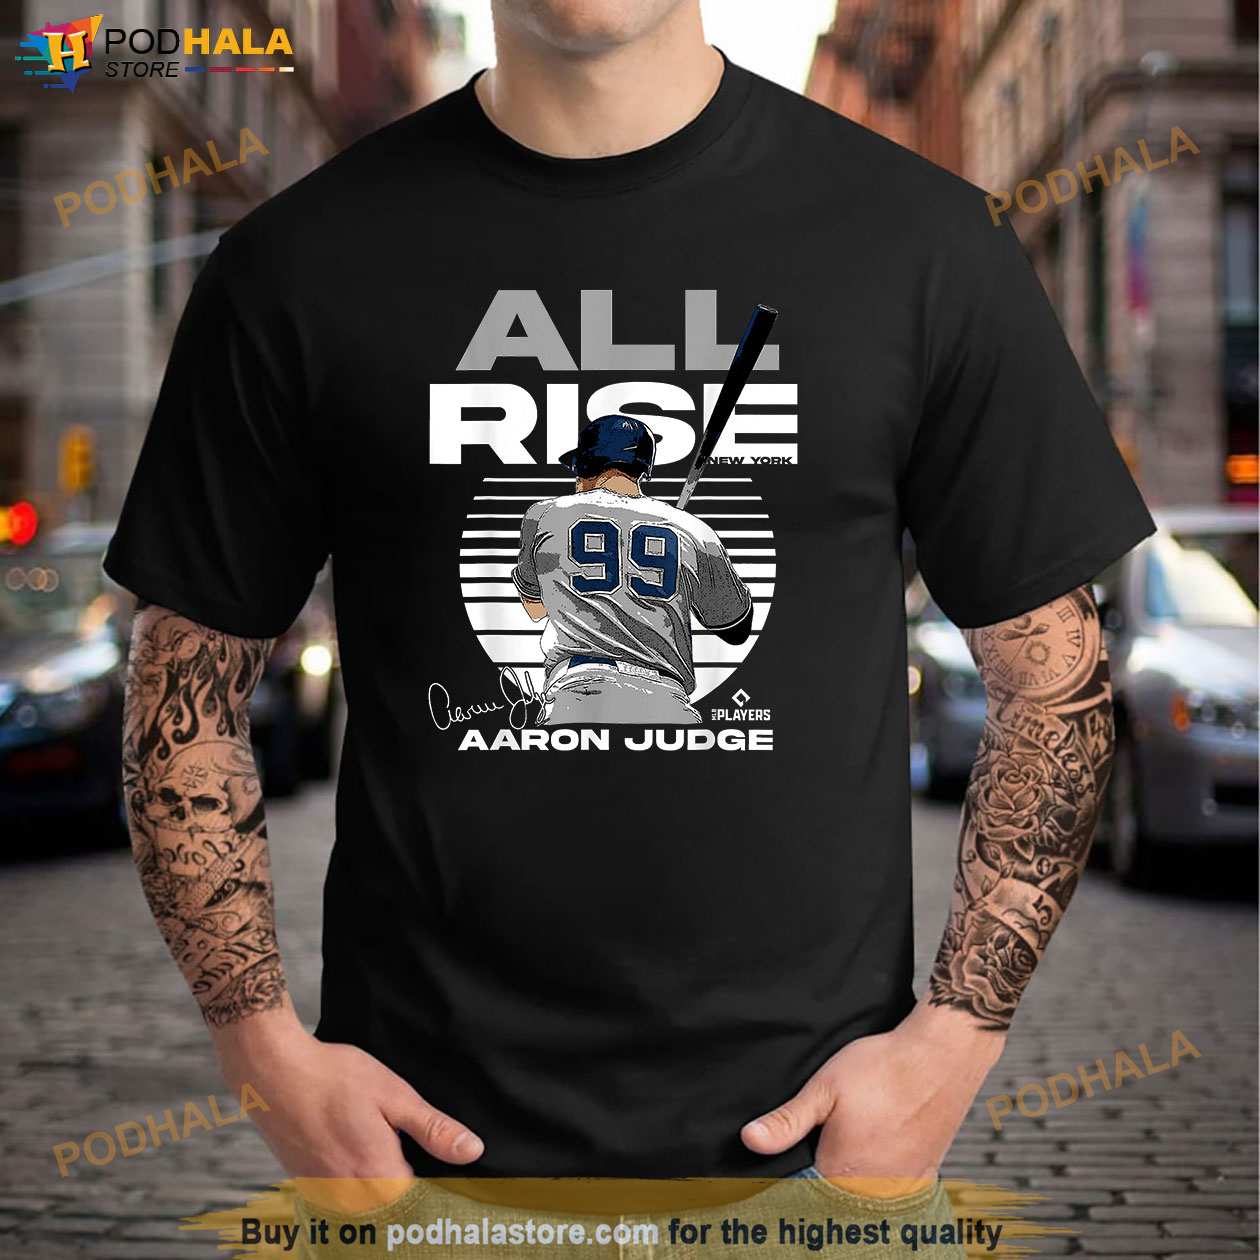 Genuine Merchandise, Tops, Womens New York Yankees 99 Aaron Judge  Official Mlb Merchandise T Shirt L